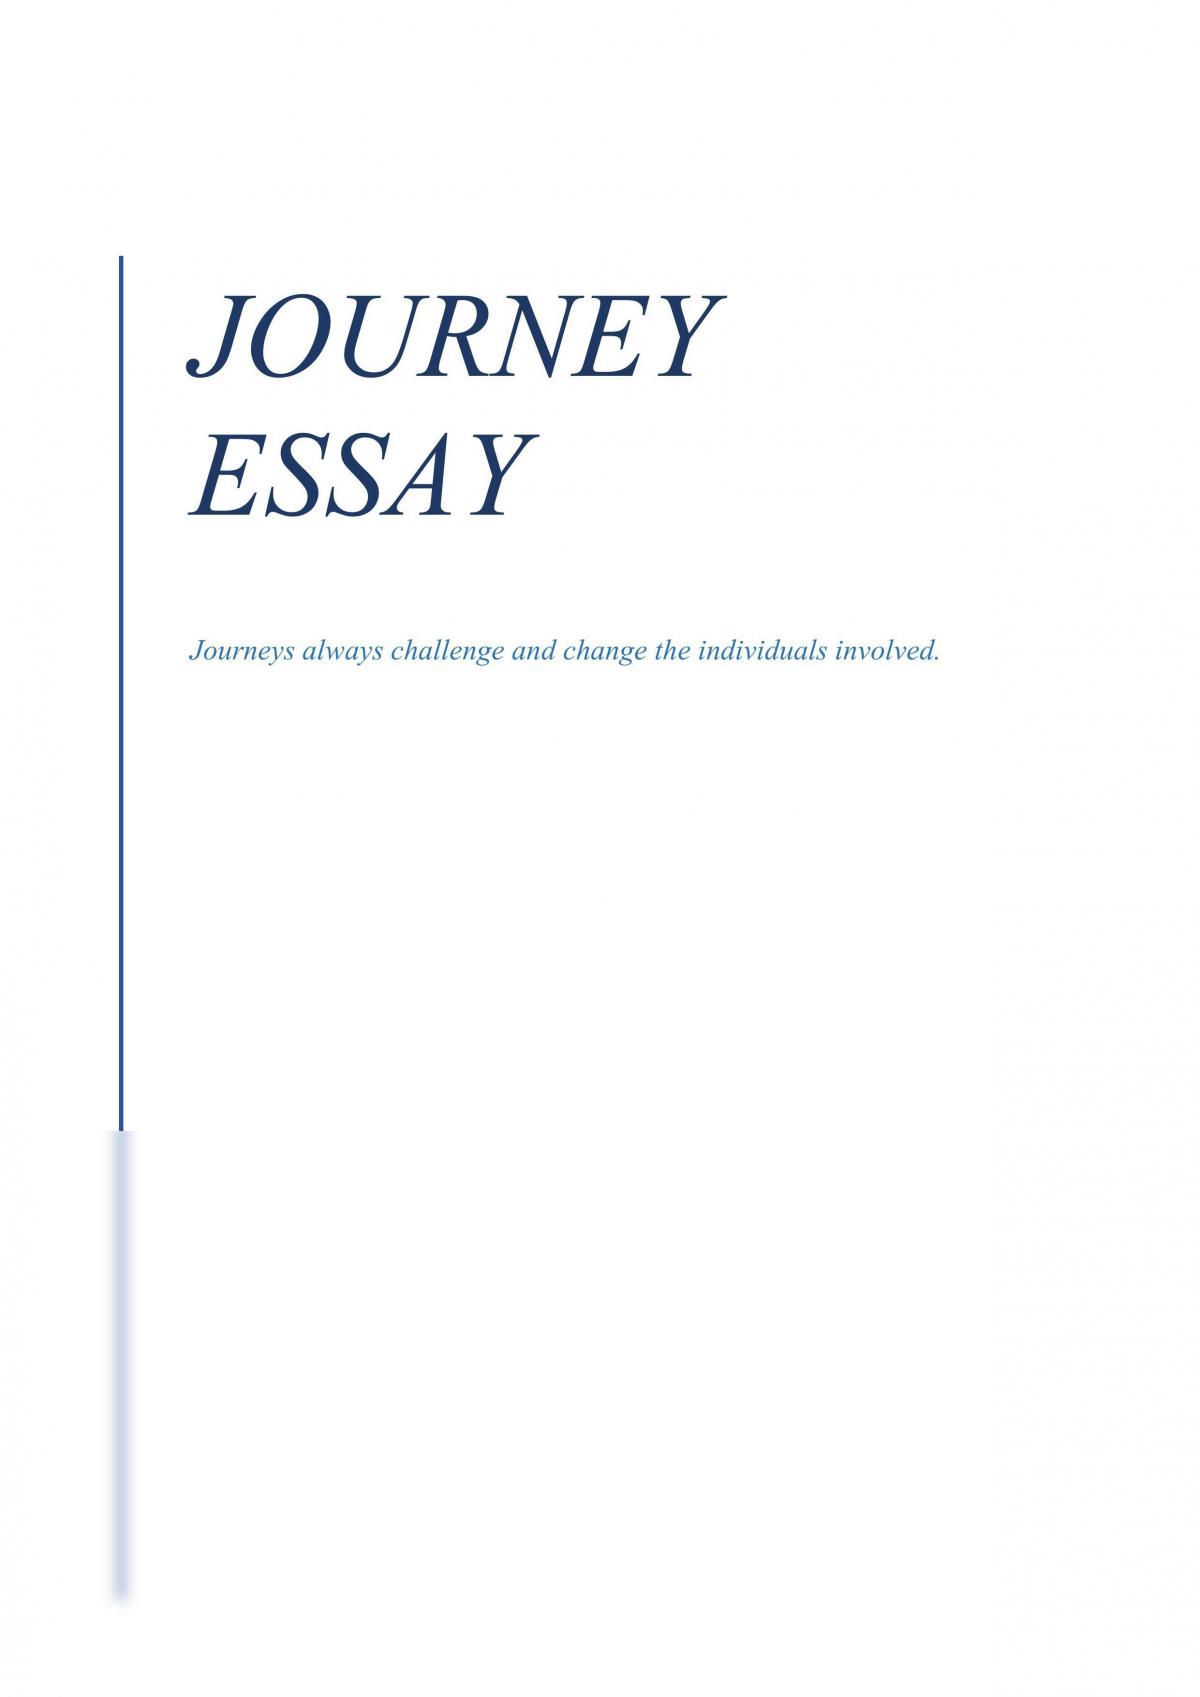 write an essay journey